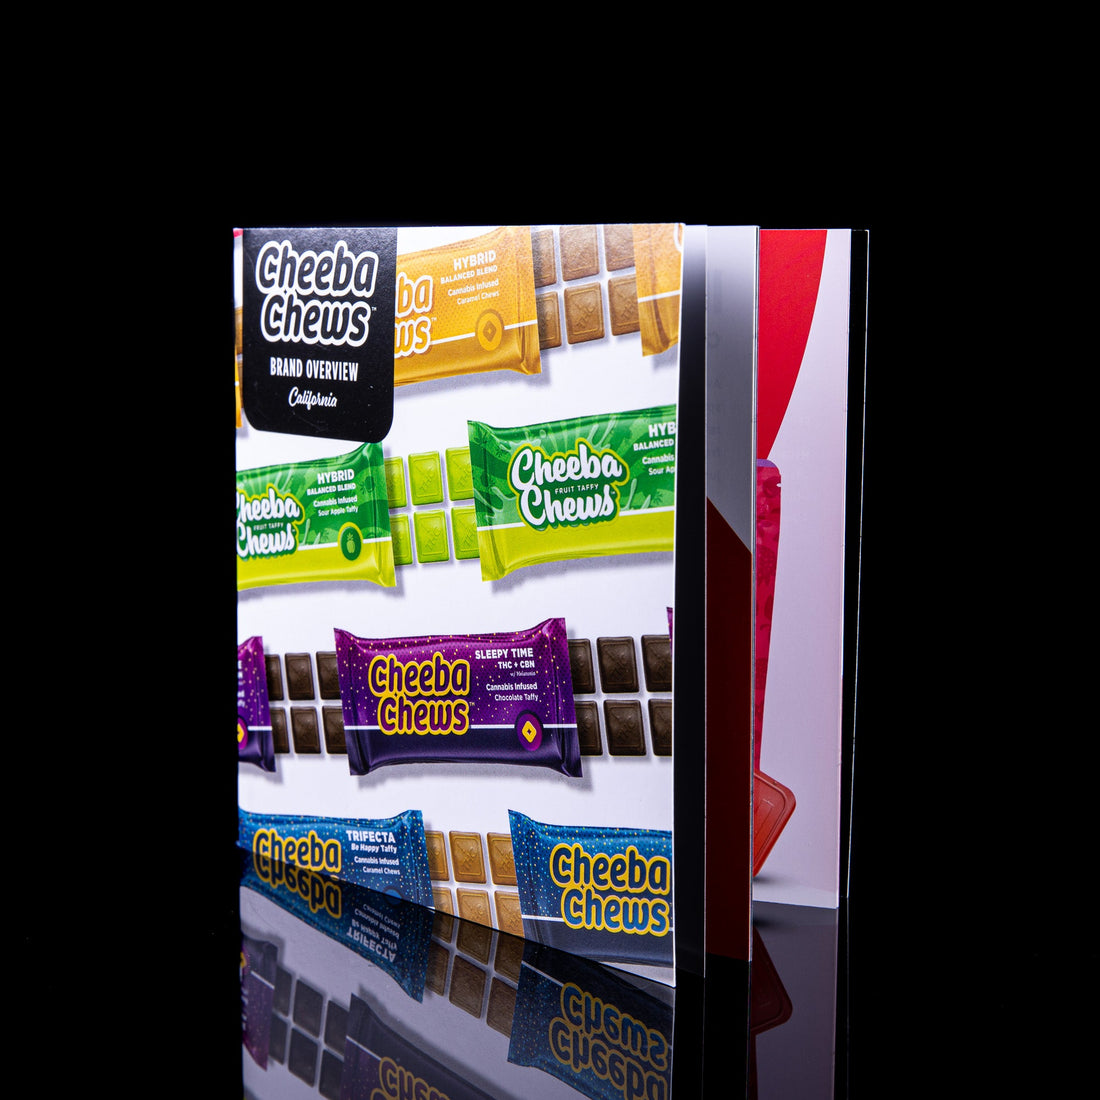 Cheeba Chews Brand Overview Booklet